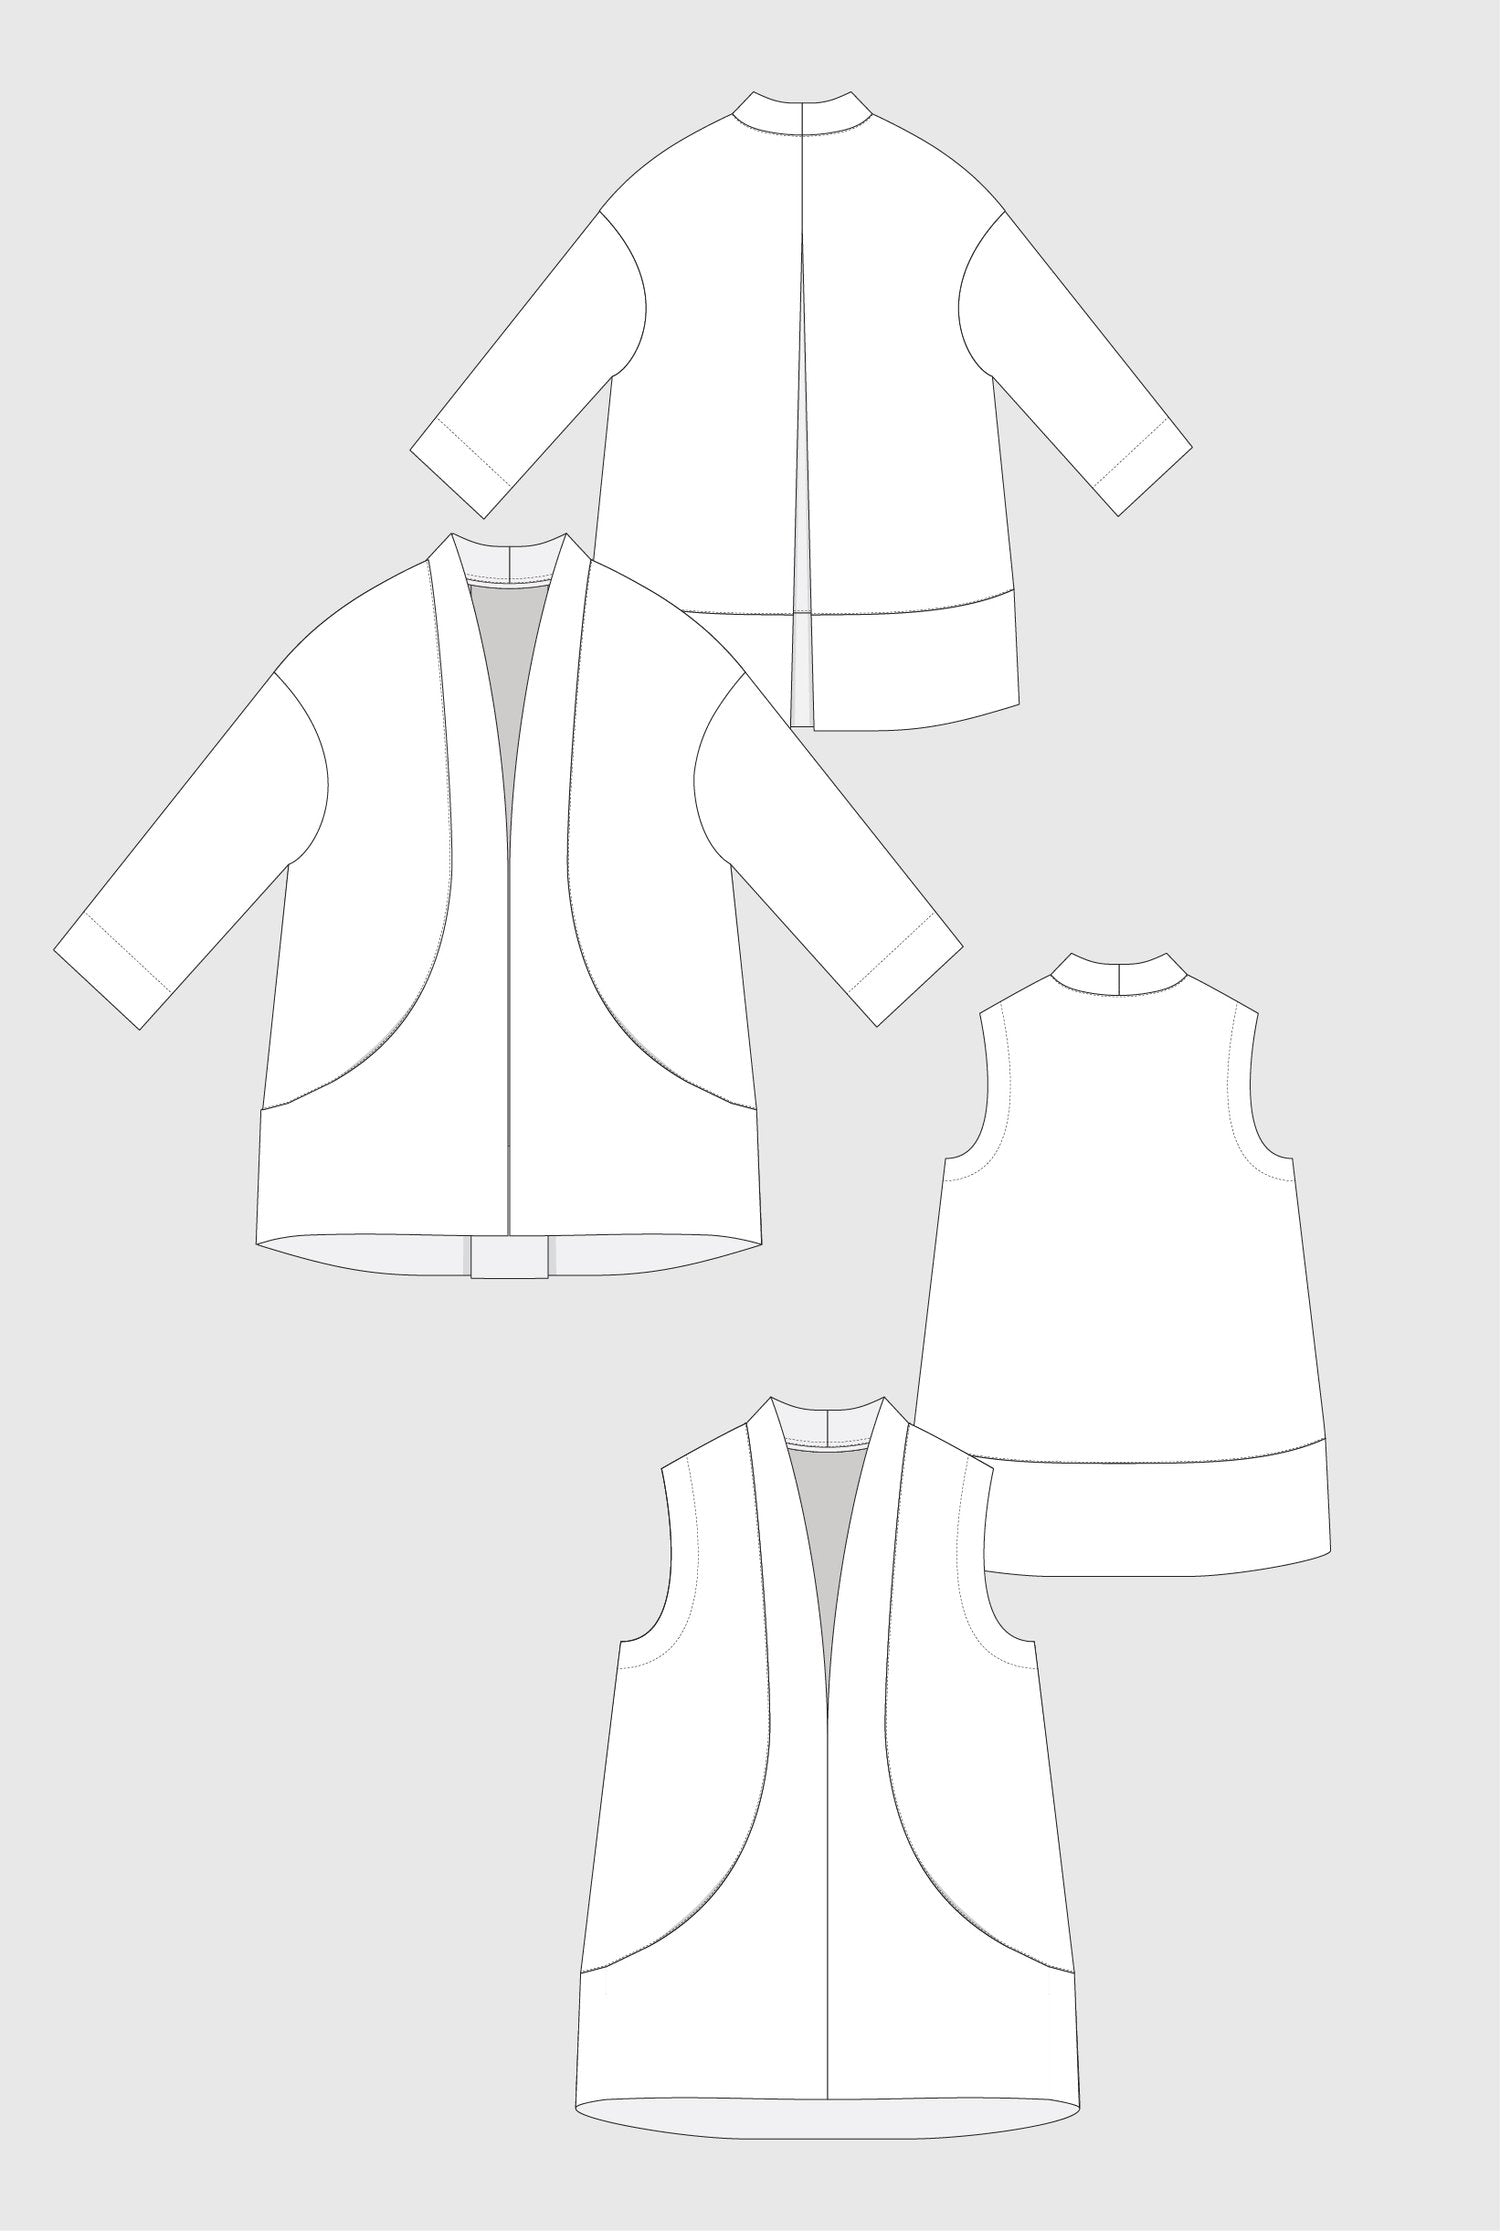 In The Folds -  FLYNN JACKET Sewing Pattern